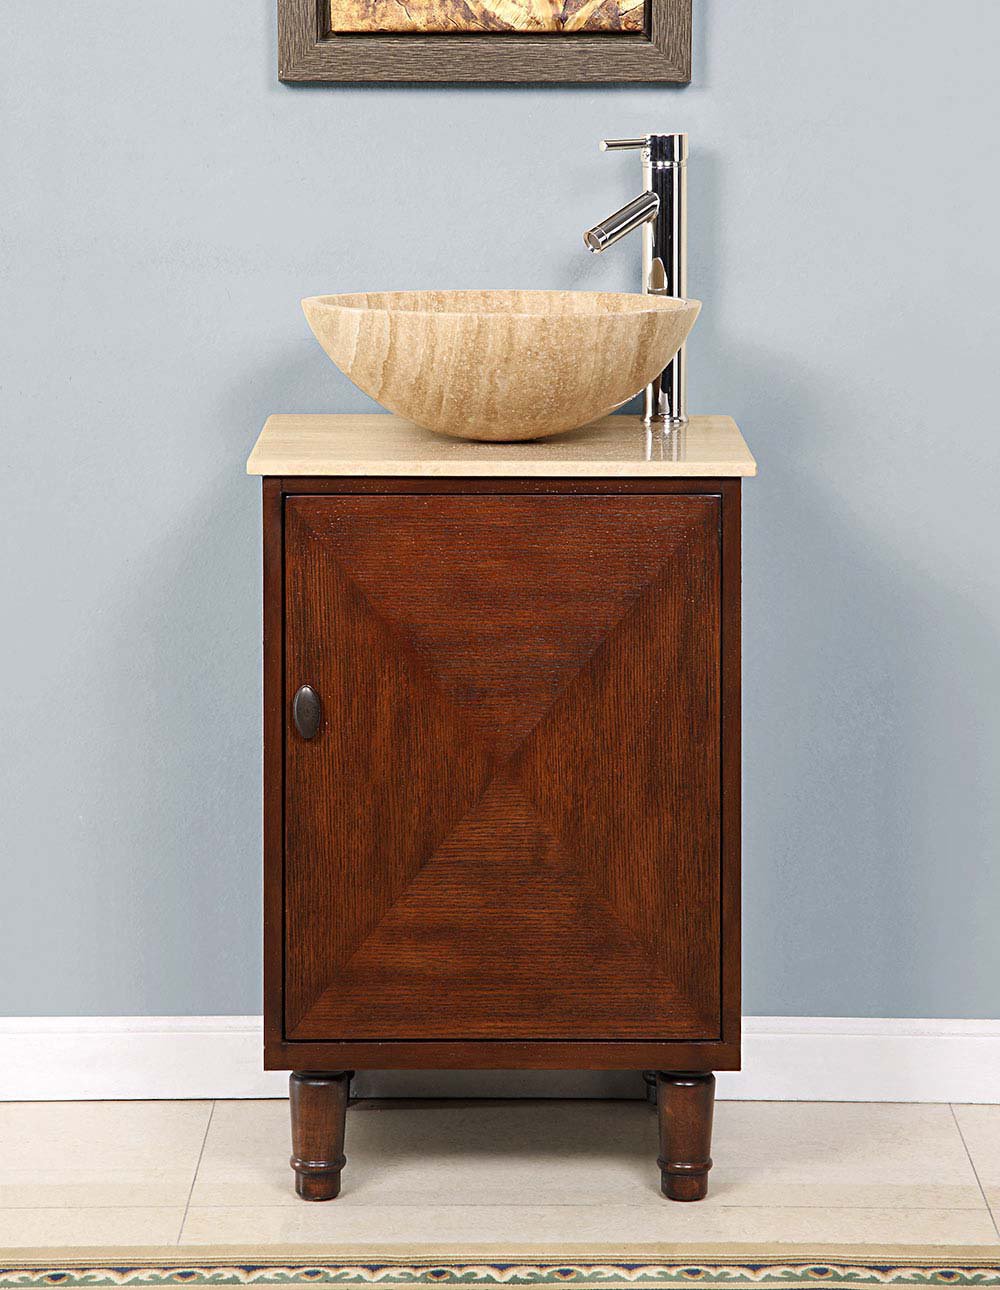 https://www.listvanities.com/images/D/Silkroad-20-inch-Travertine-Vessel-Sink-Vanity.jpg